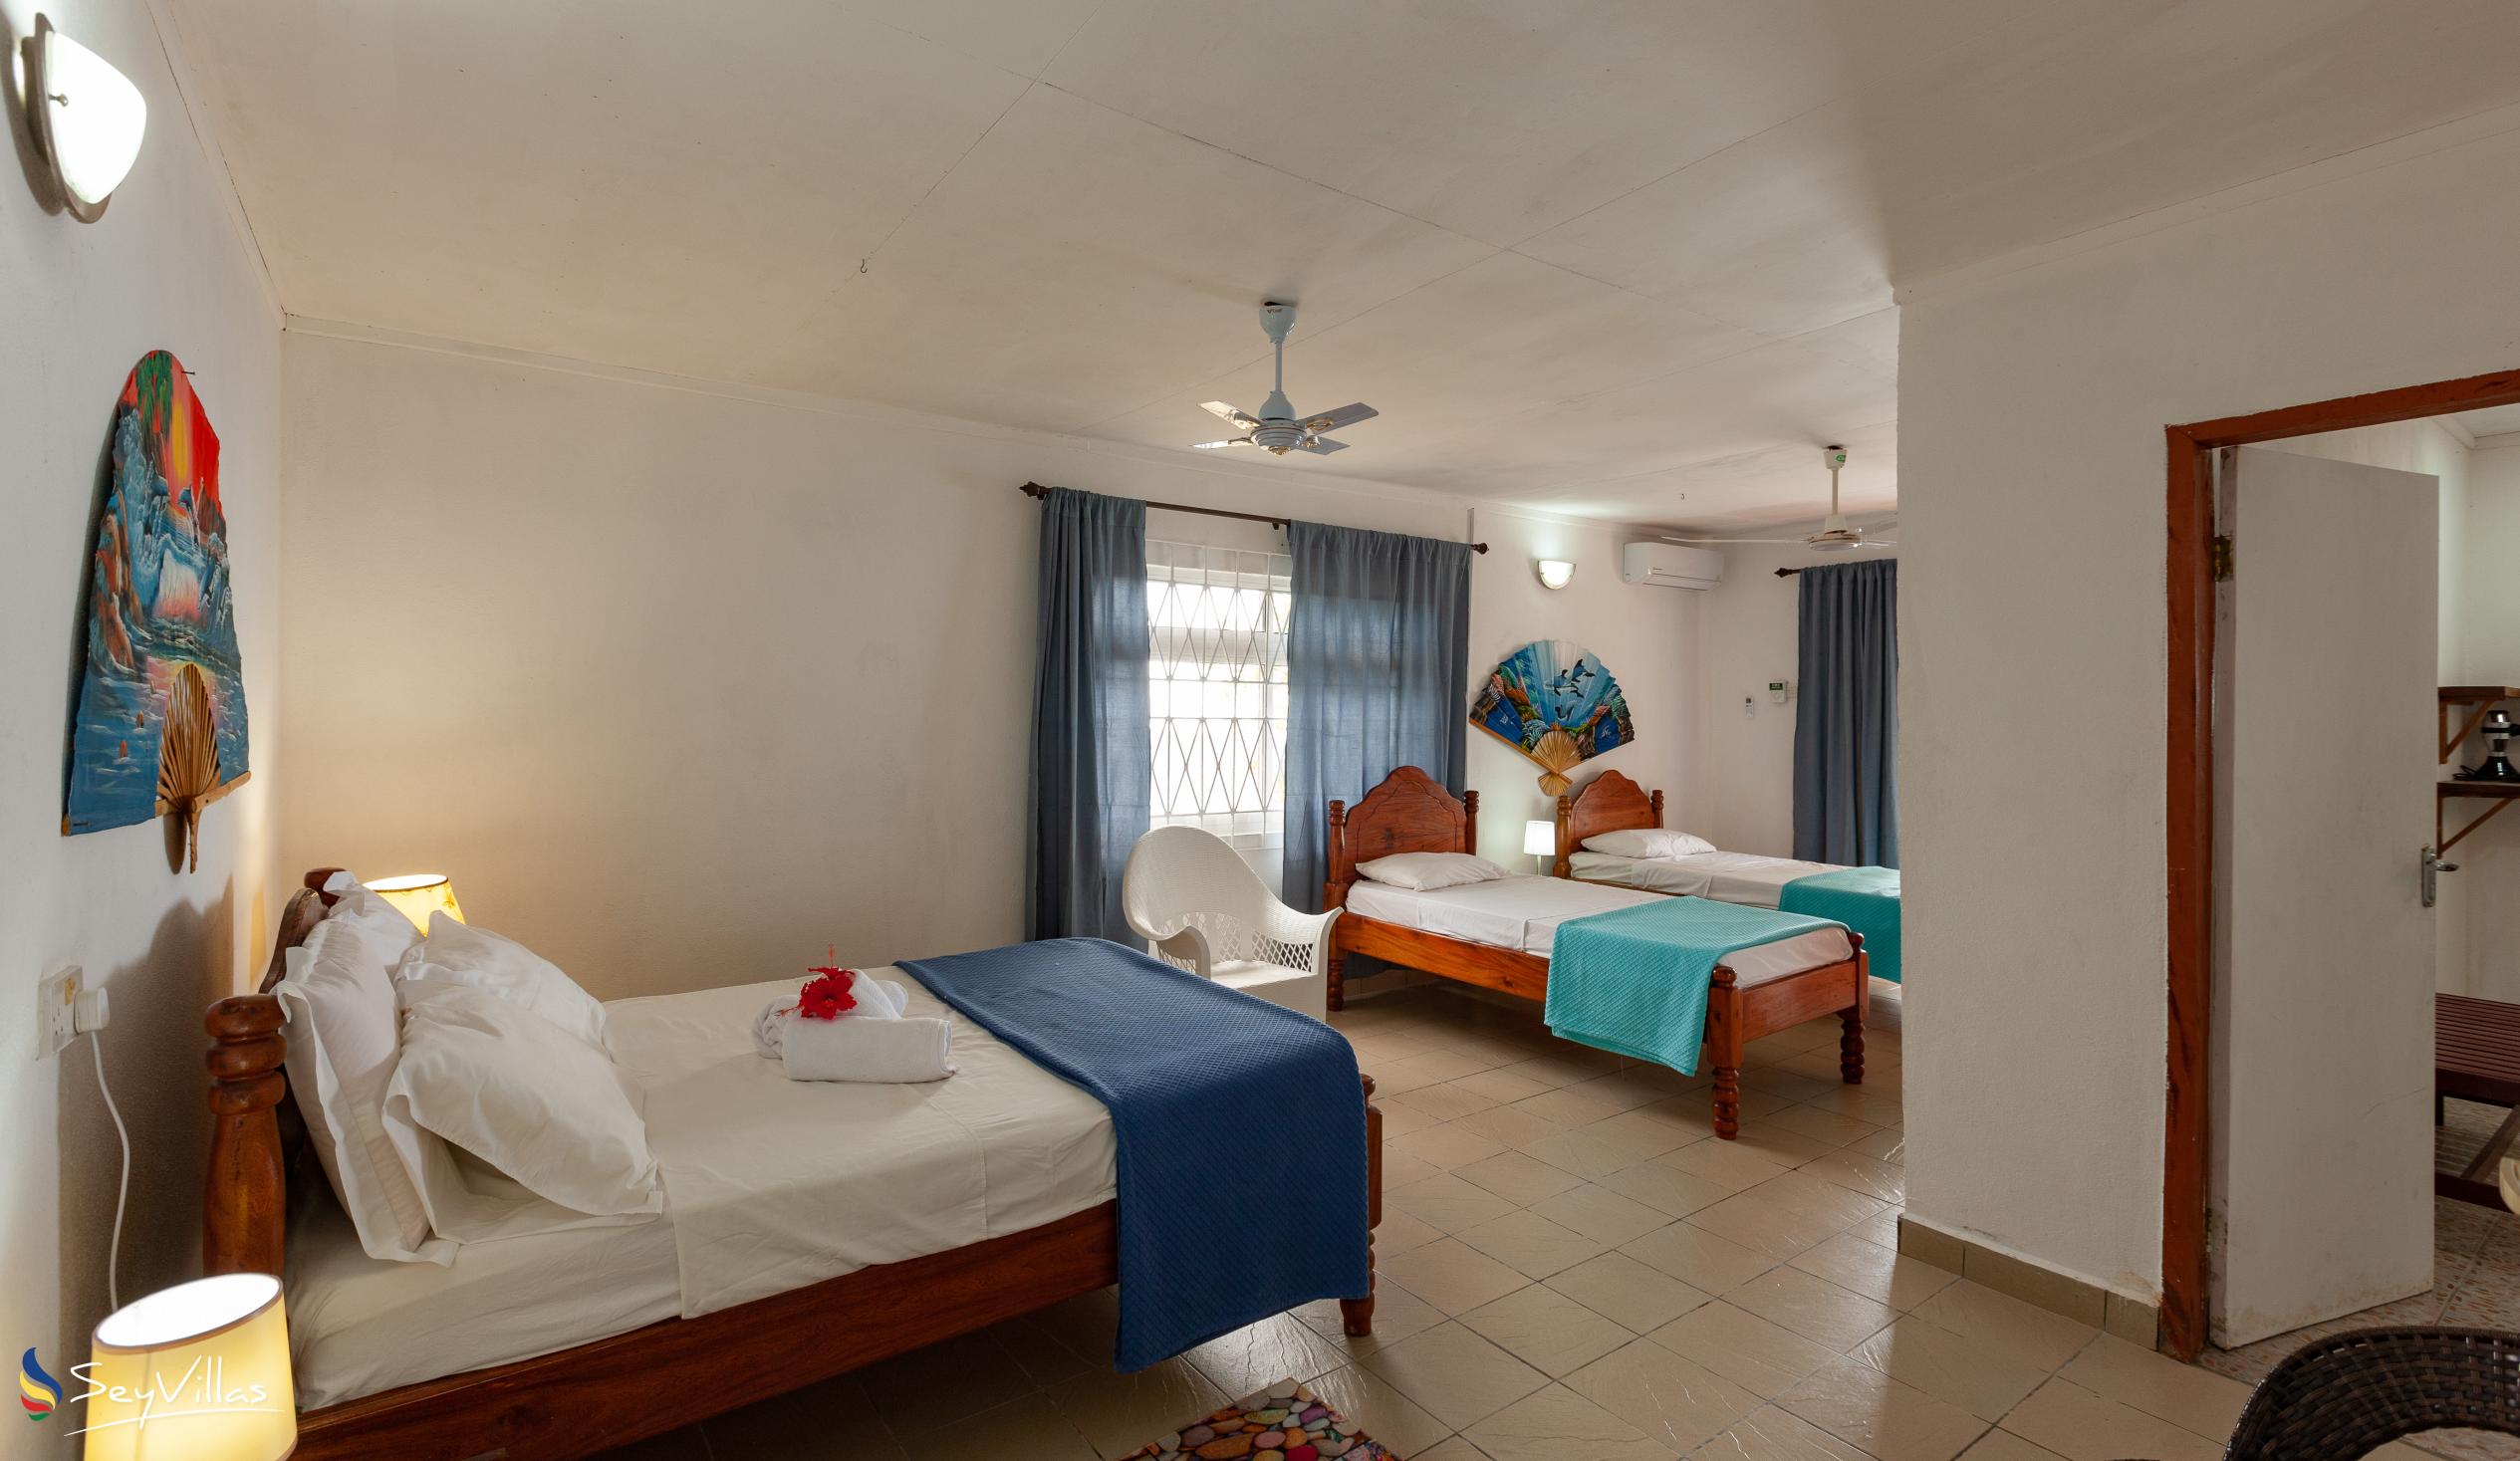 Foto 52: Maison du Soleil - Villa 2 chambres - Praslin (Seychelles)